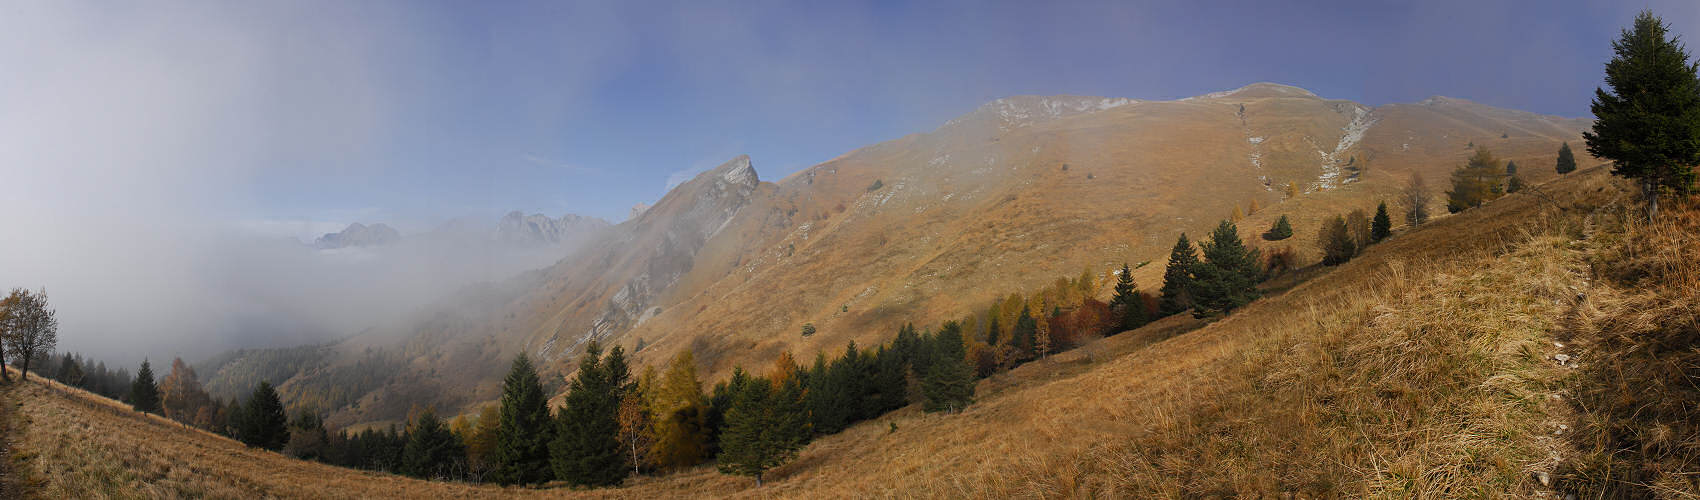 Monte Serva Parco Nazionale Dolomiti Bellunesi Schiara-Pelf-Terne-Serva